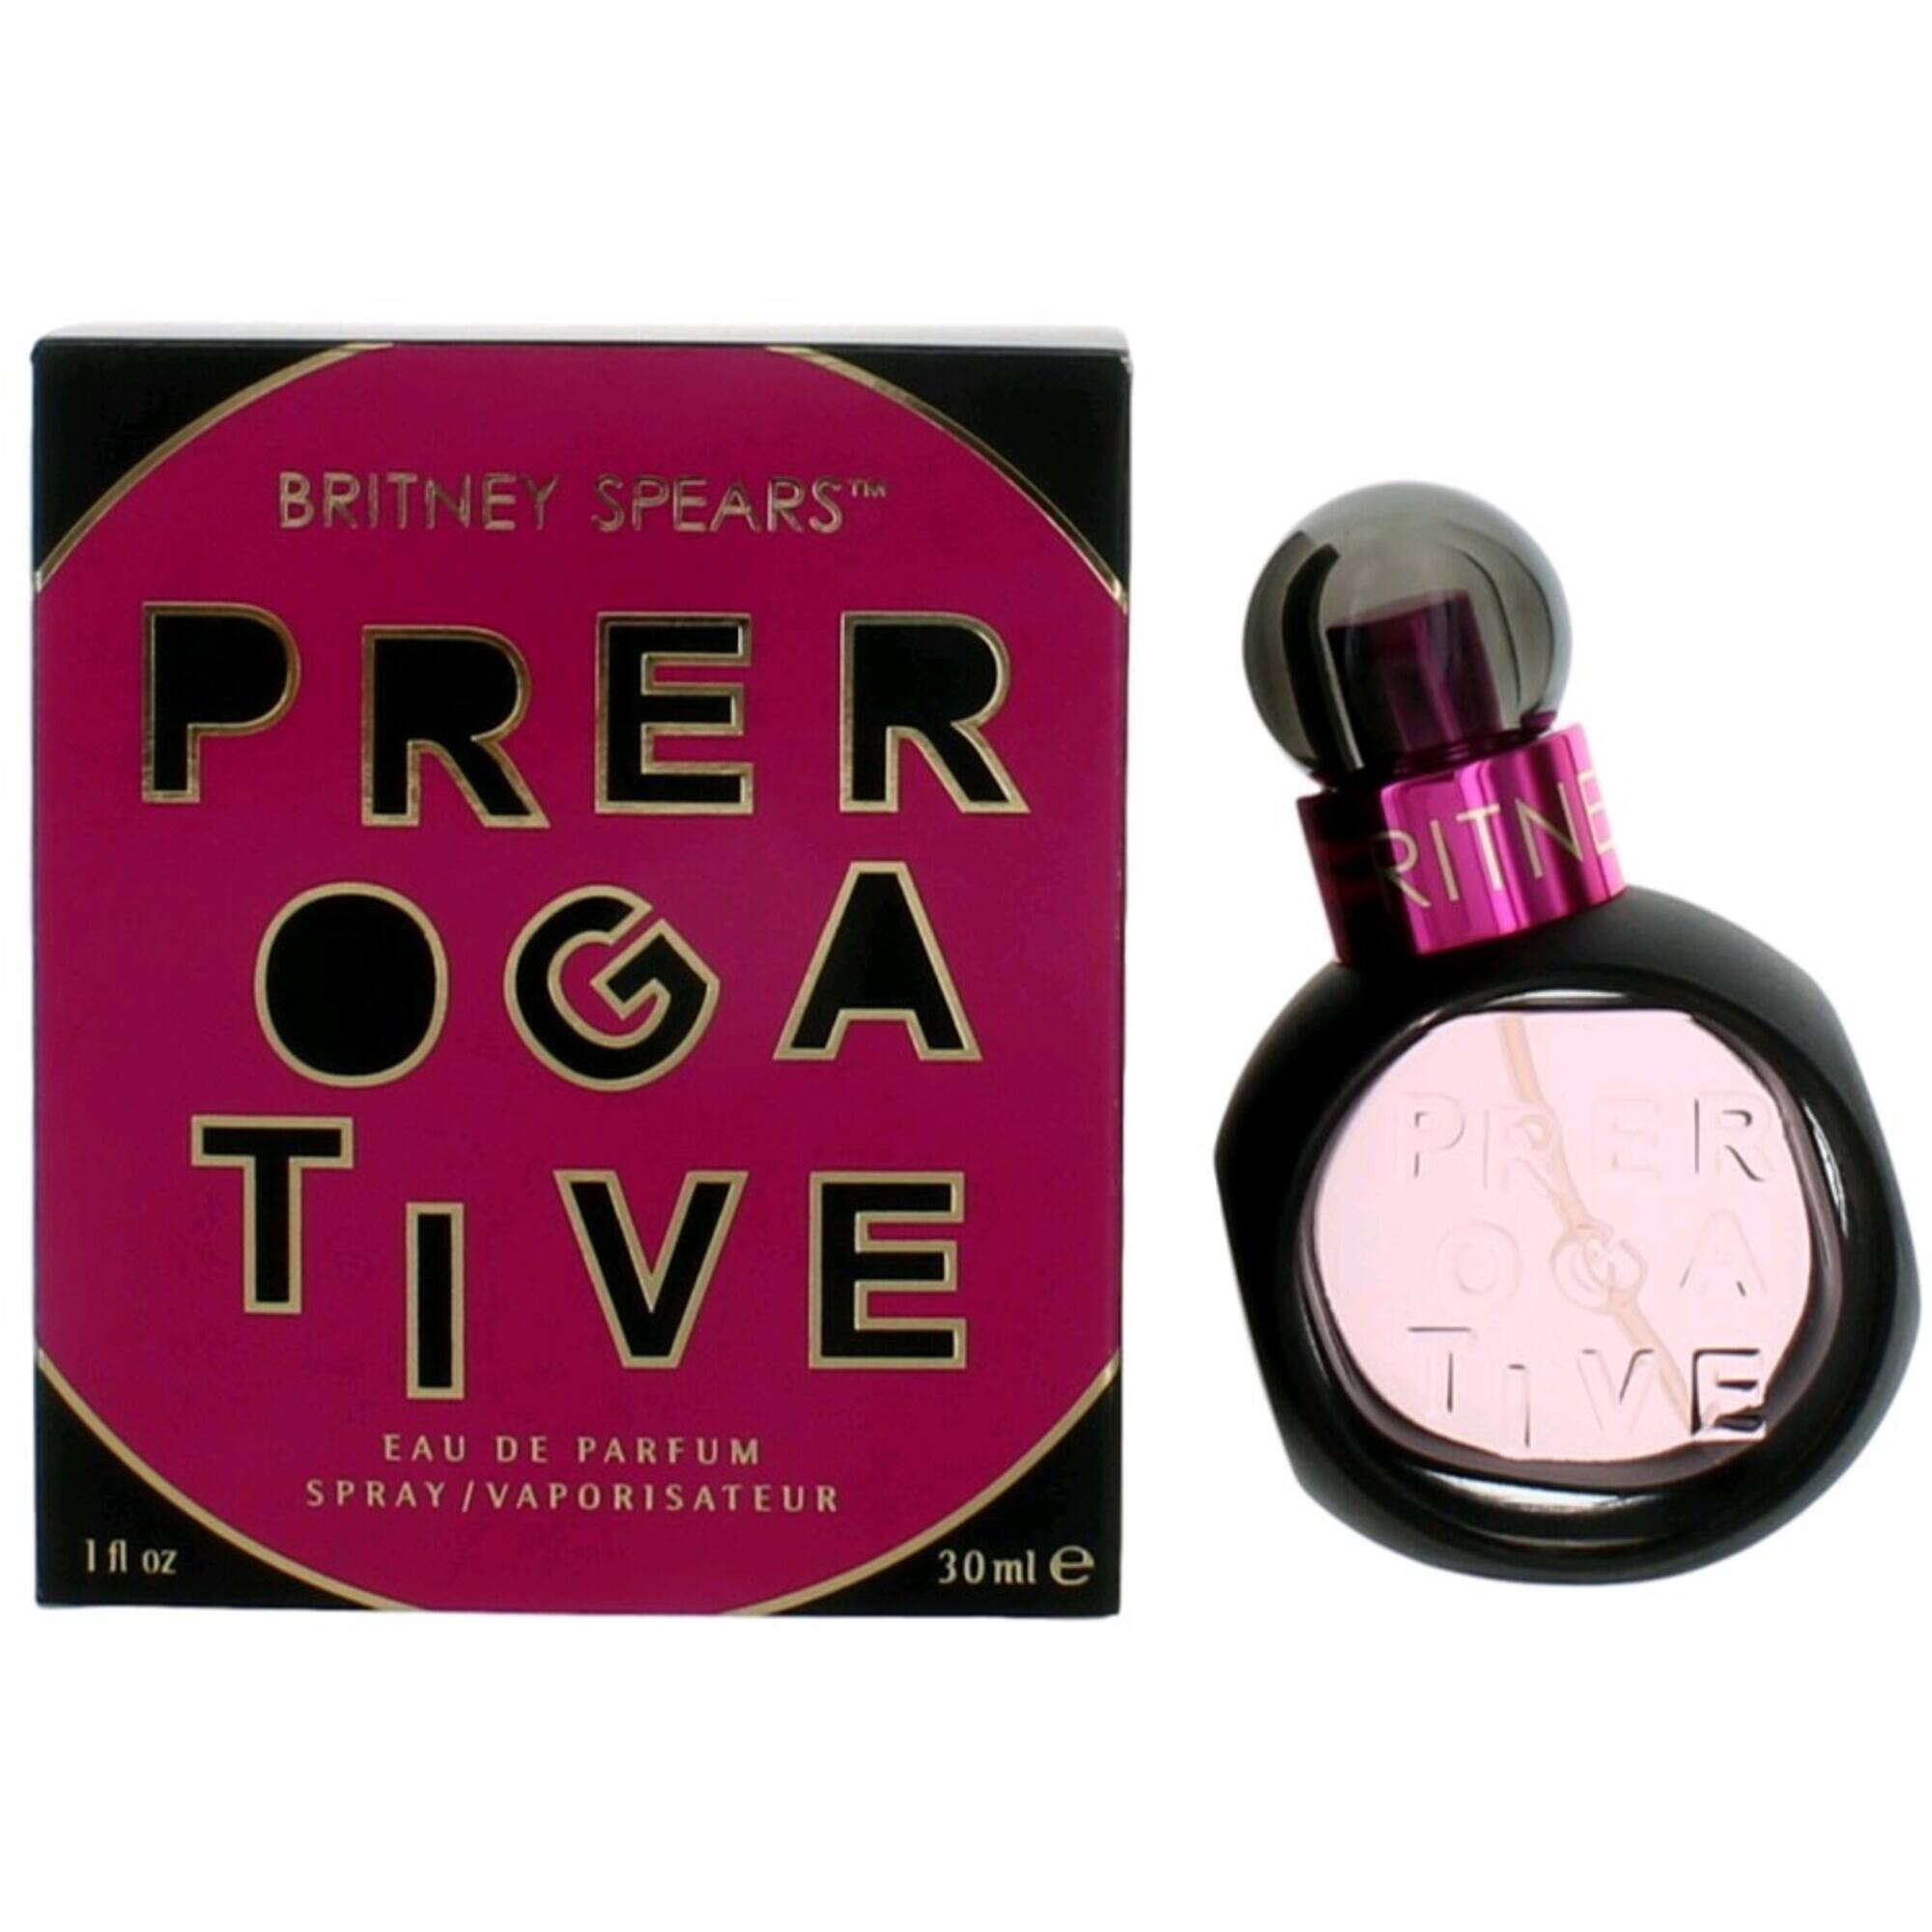 Britney Spears Women's Eau De Parfum Spray - Prerogative Sensual Fragrance, 1 oz